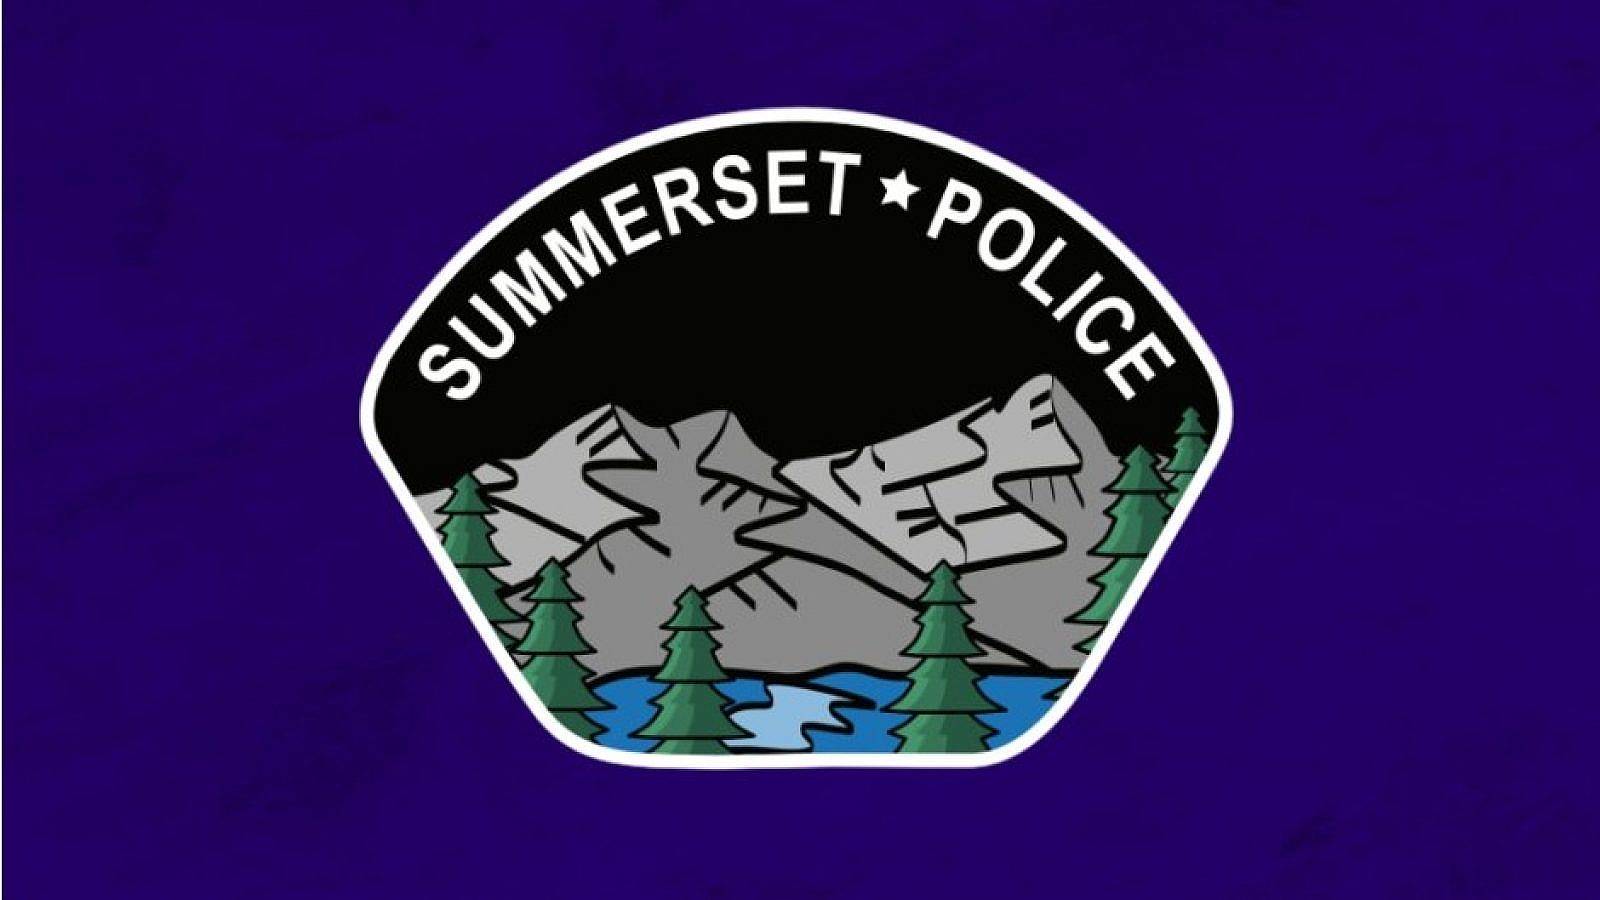 Summerset Police